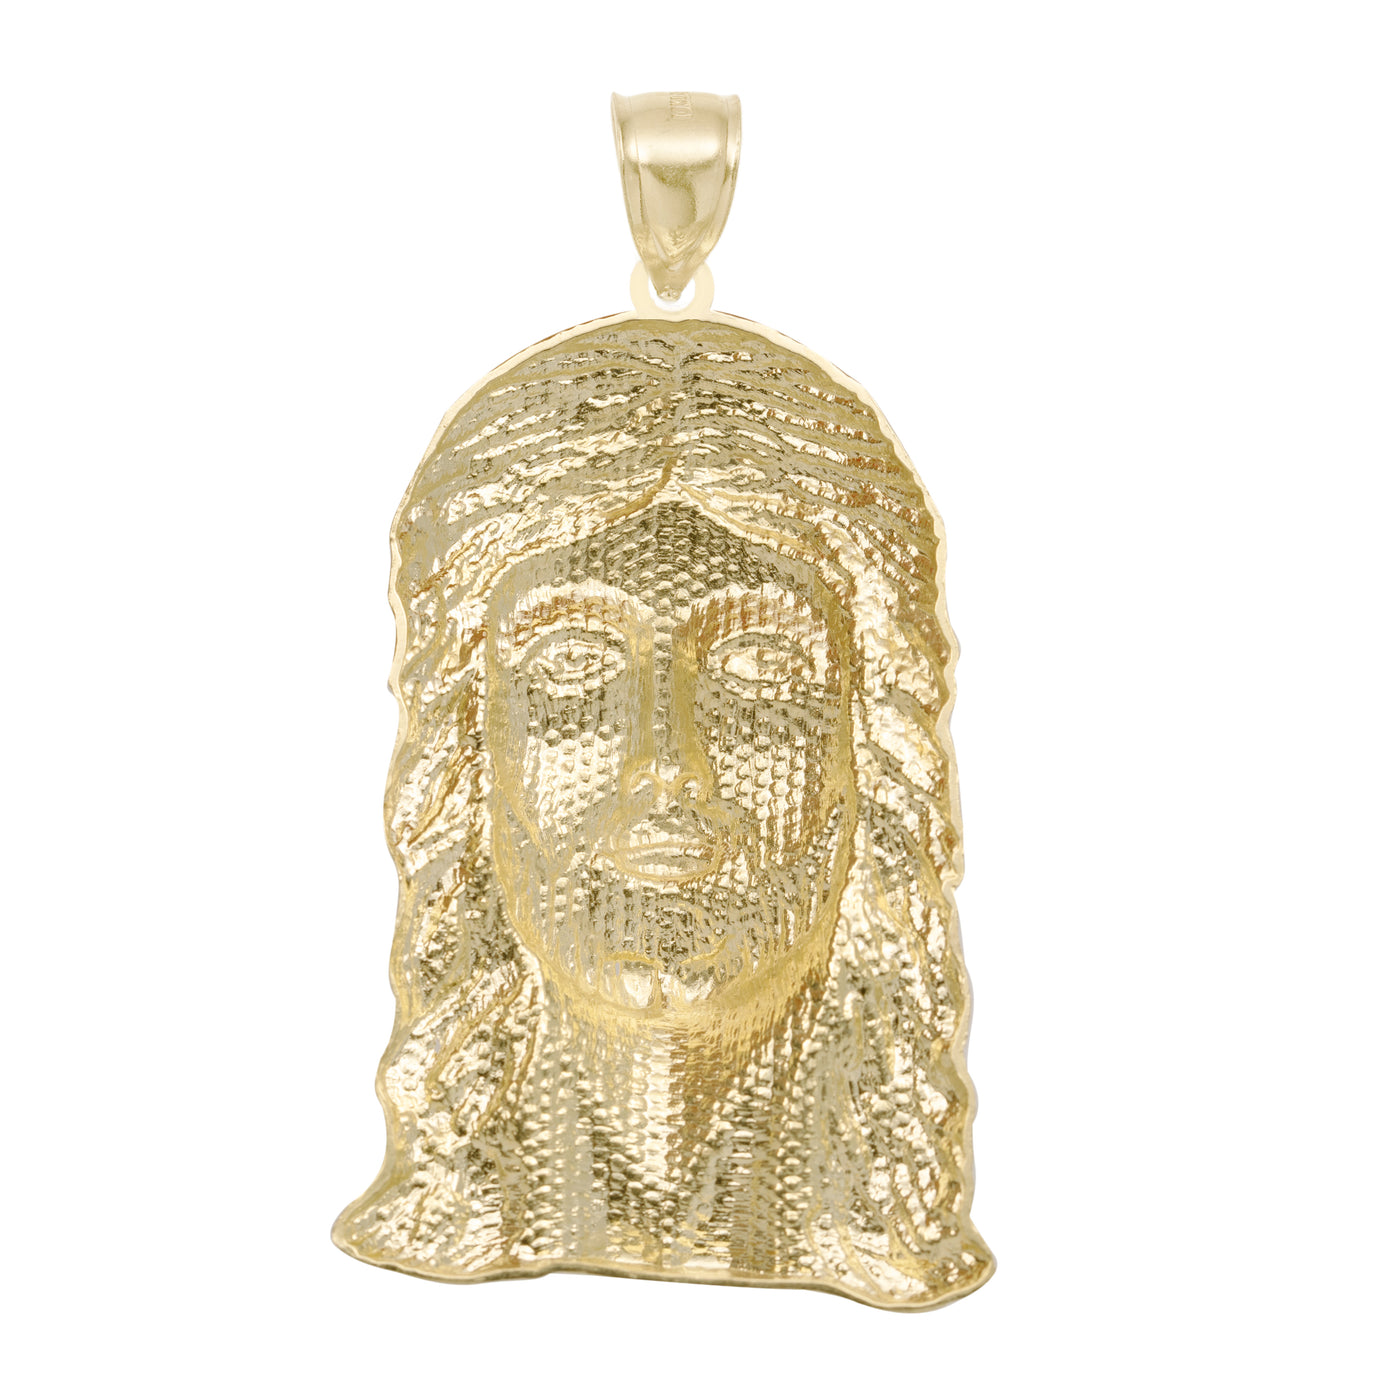 3" Diamond Cut Face of Jesus Pendant Solid 10K Yellow Gold